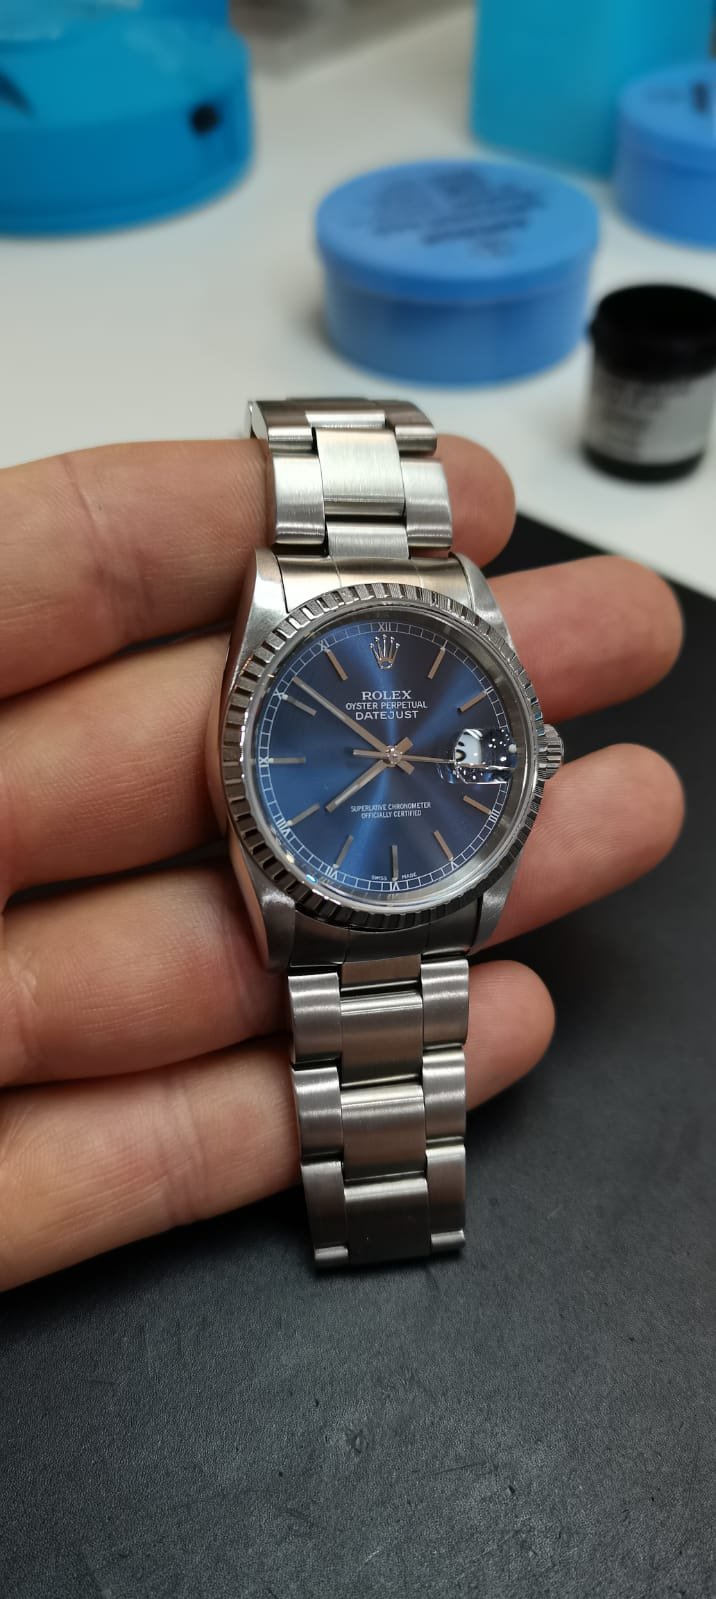 Rolex watch repair service parts ordered.jpeg